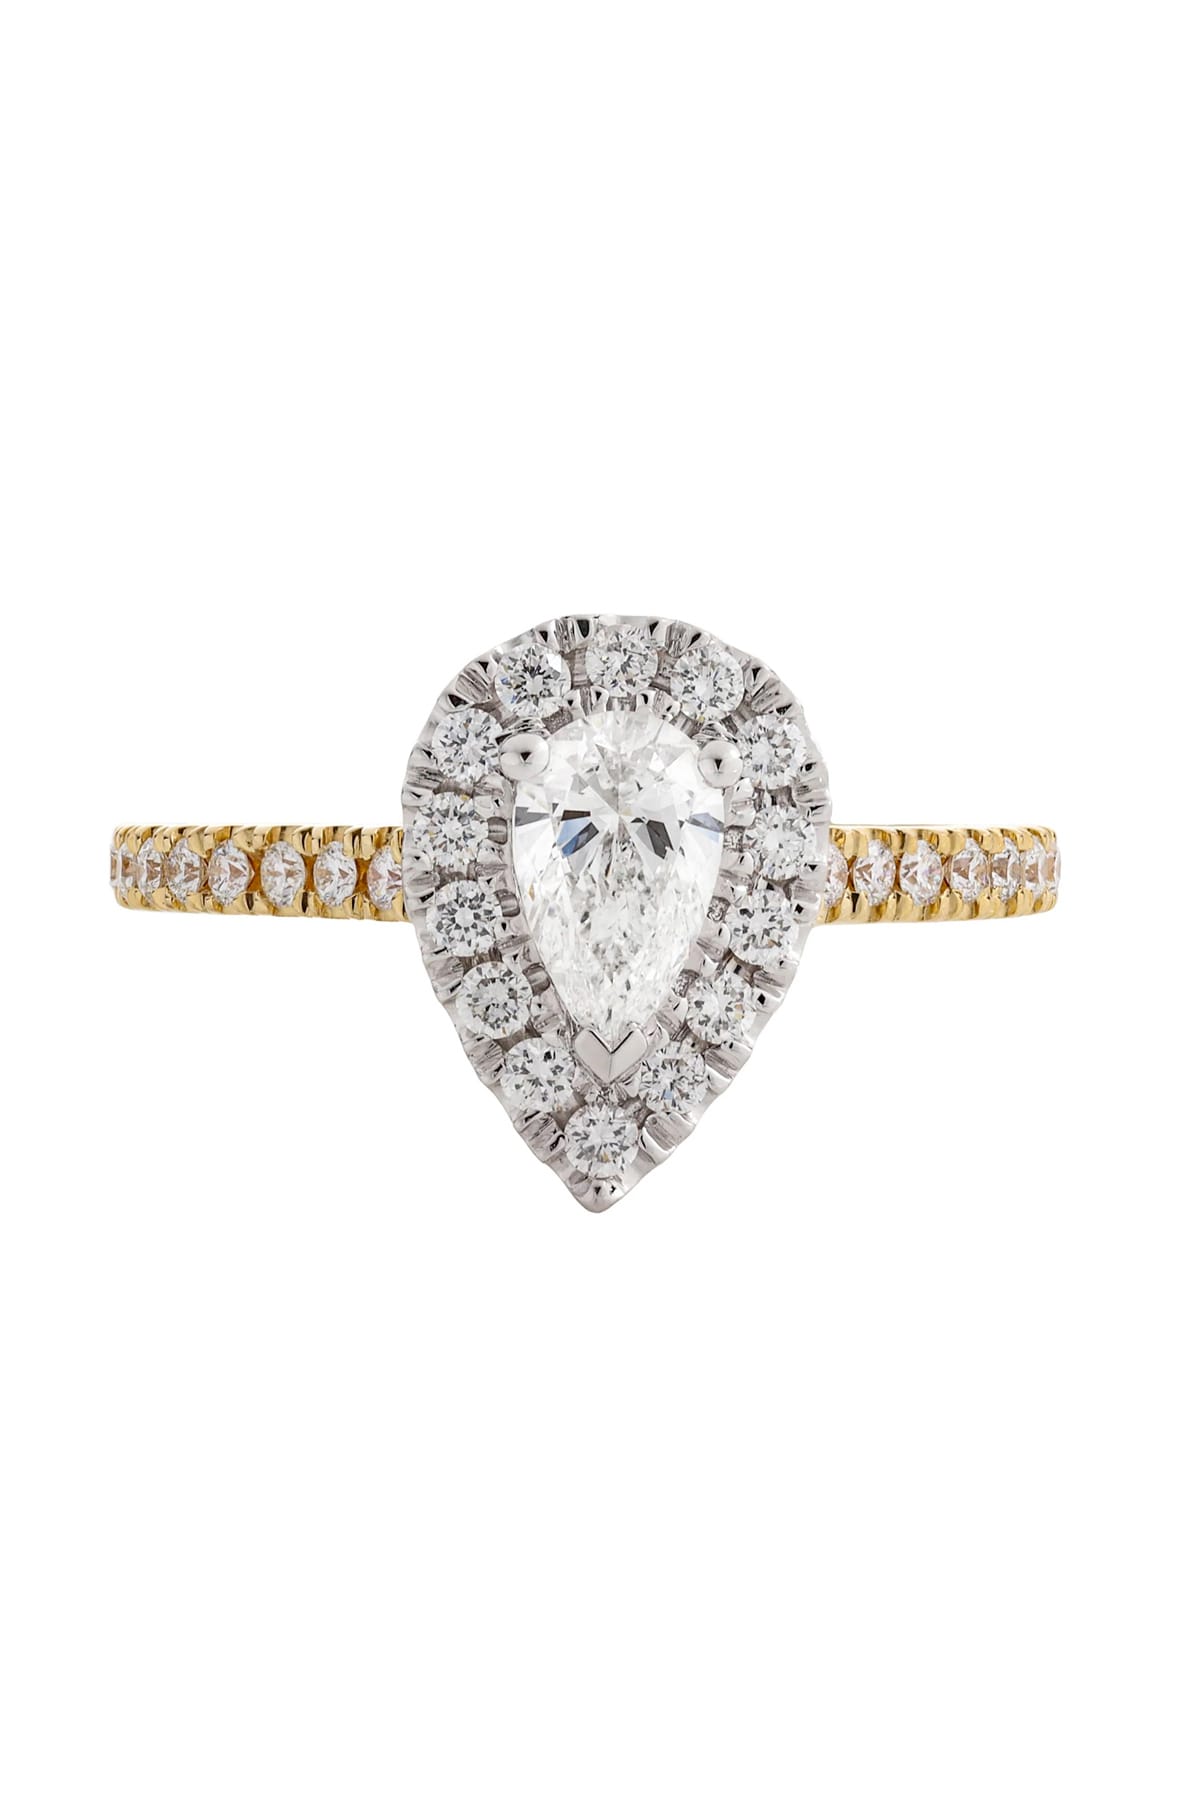 18 Carat Gold 0.50 Carat Pear Diamond Halo Engagement Ring available at LeGassick Diamonds and Jewellery Gold Coast, Australia.